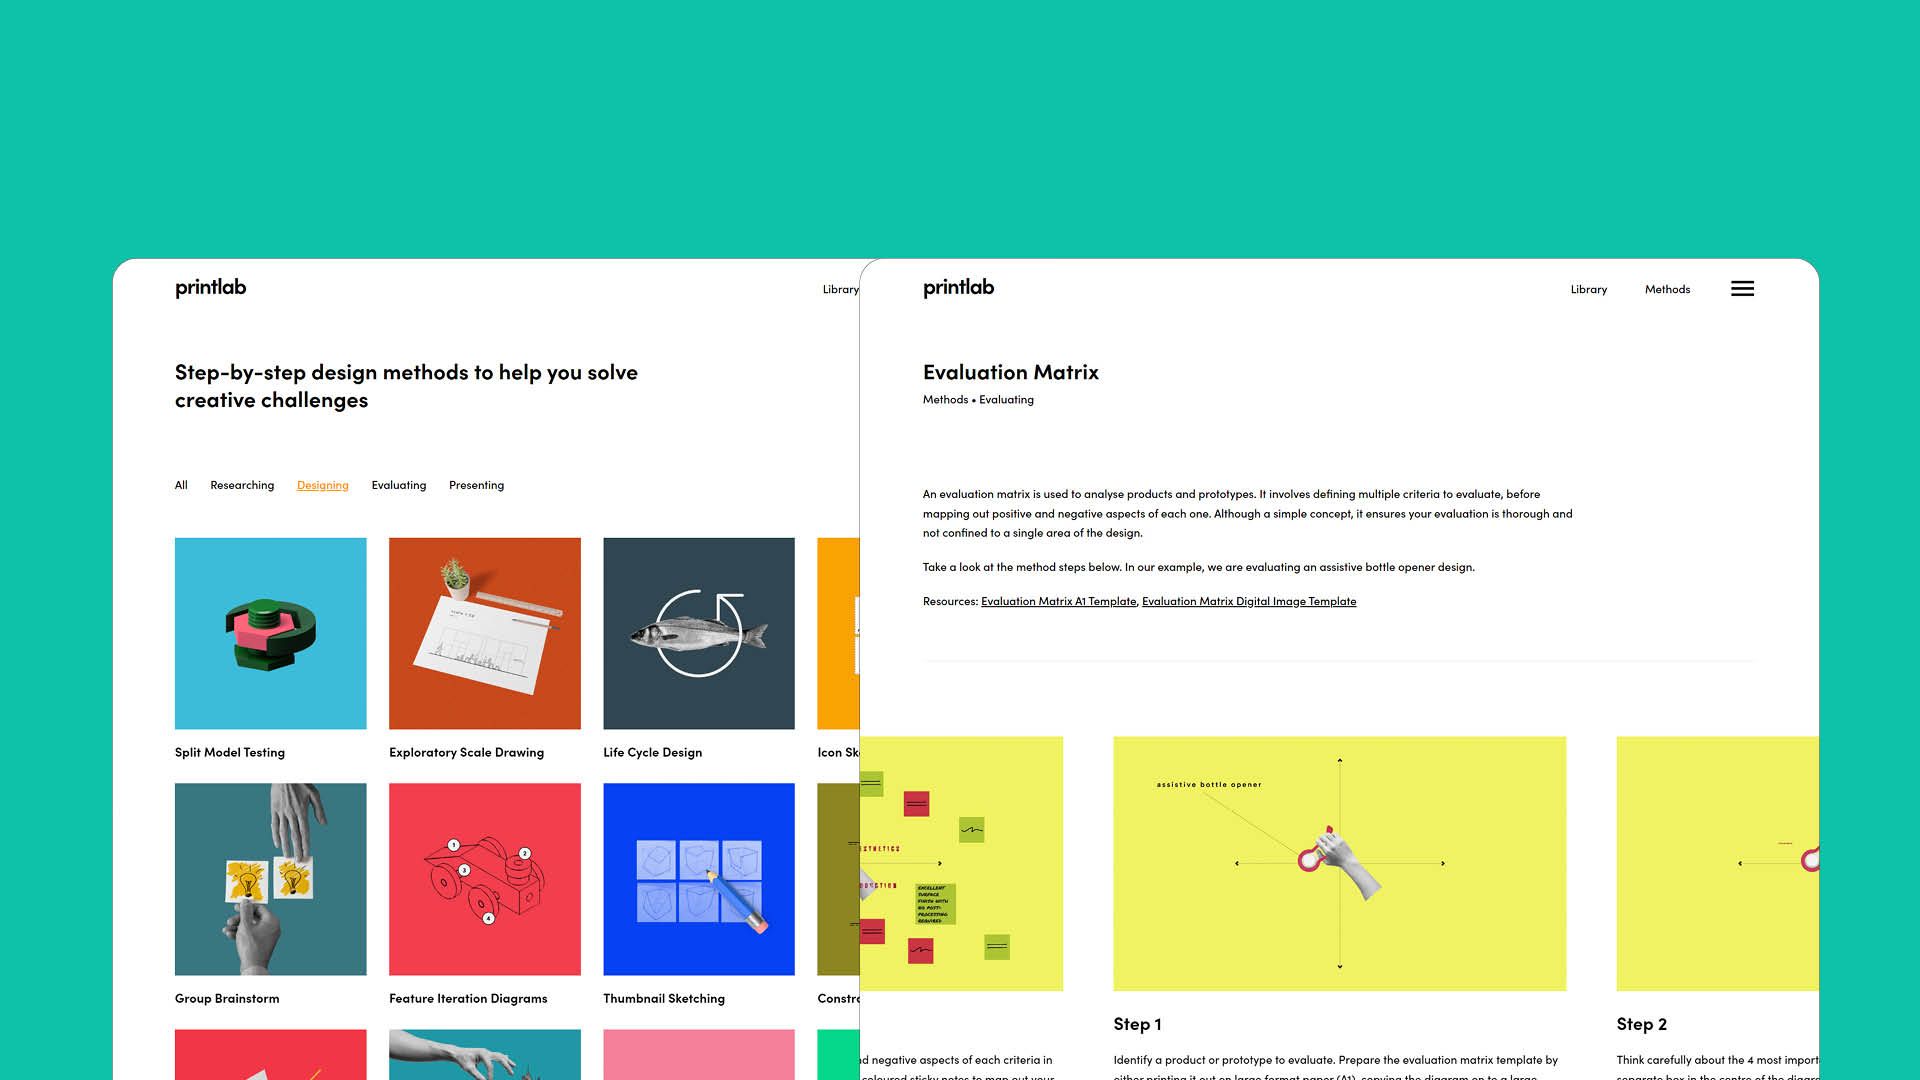 2 website screens showing PrintLab's design method toolkit.